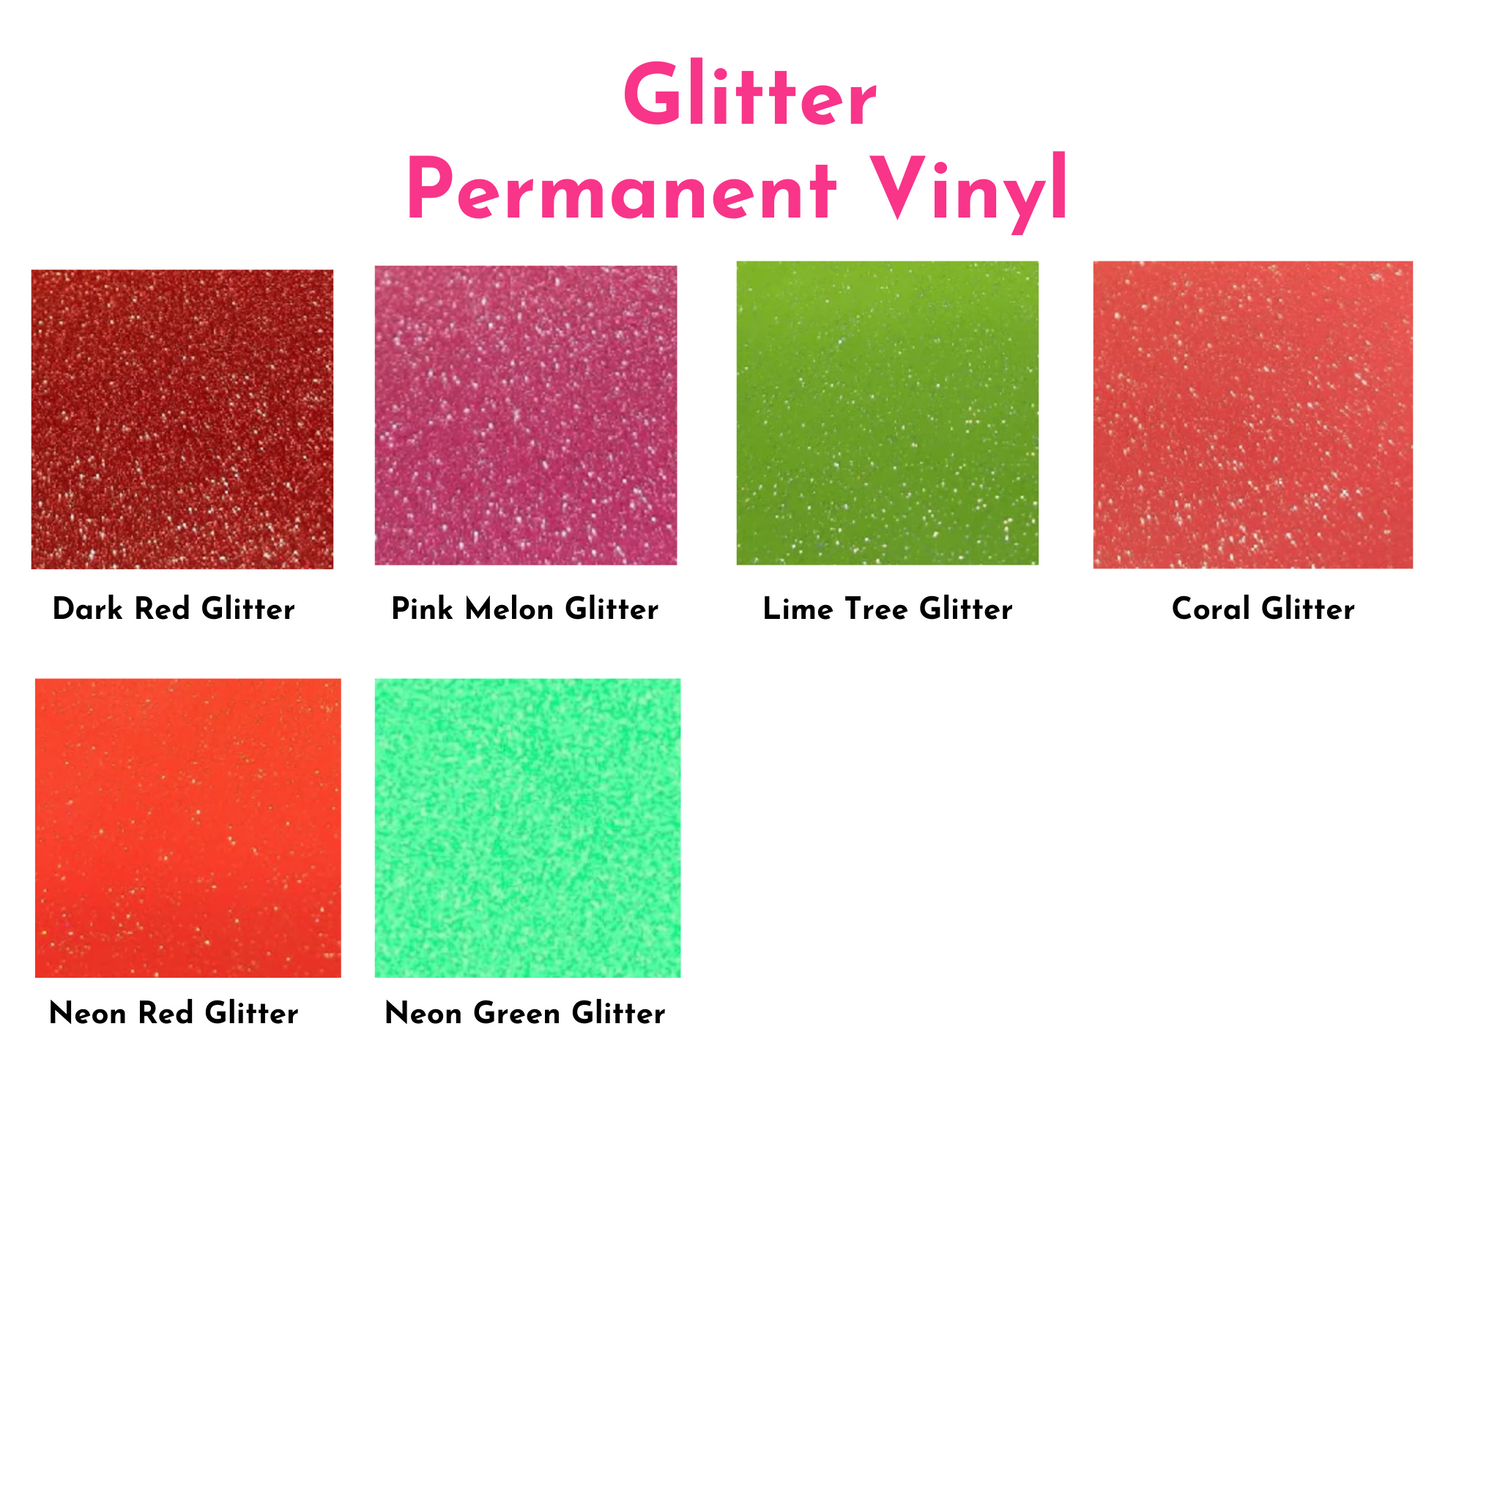 Glitter Permanent Vinyl